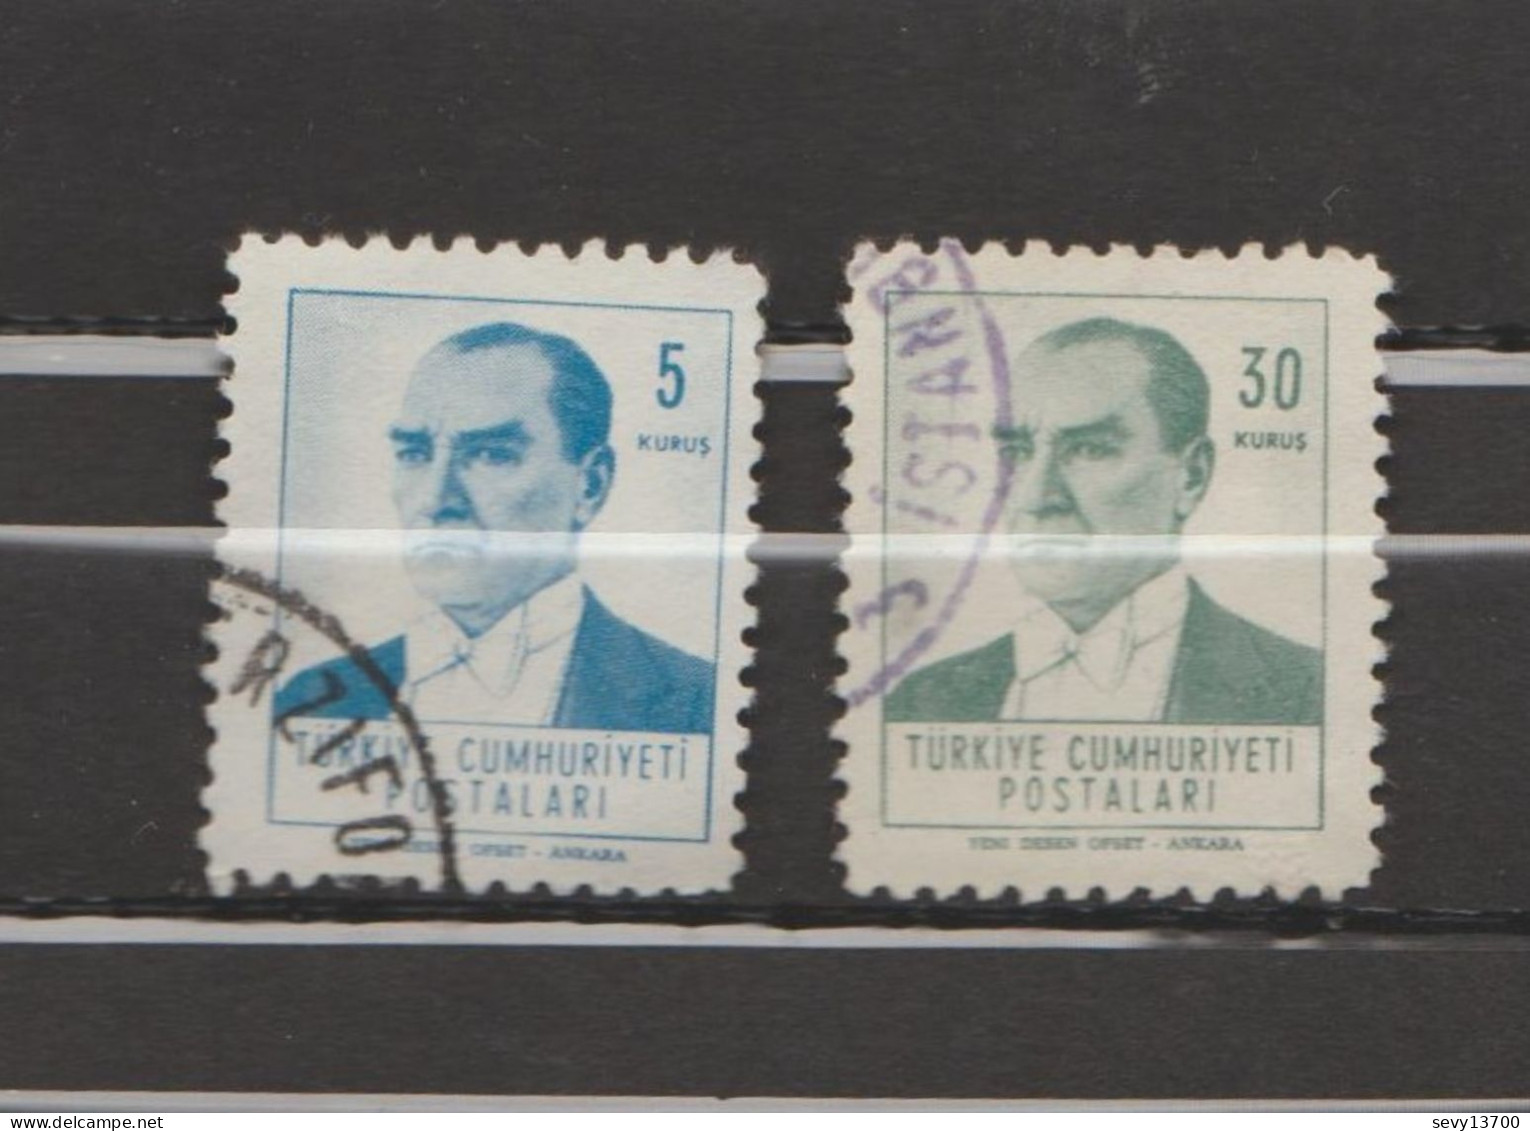 Turquie - lot 33 timbres Atatürk Mi 1276 - Mi 1280 - Mi 1301 - Mi 958 y - Mi 946 neuf - Mi 960 y - Mi1493 - 1495 - 2172